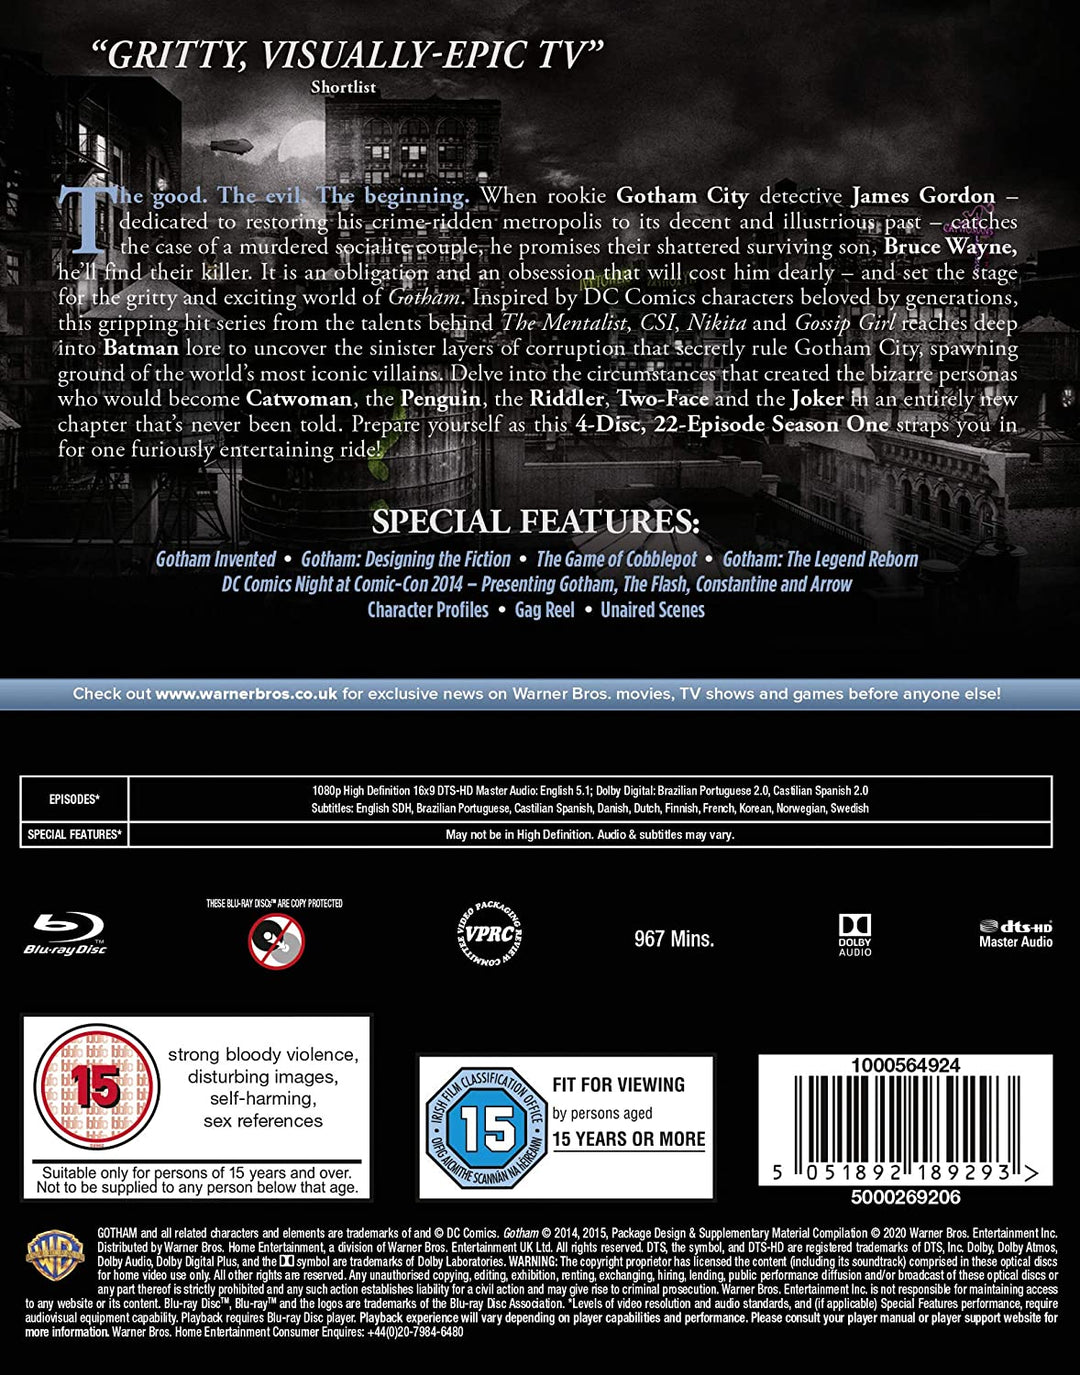 Gotham - Seizoen 1 [Blu-ray] [2014] [Regio vrij]